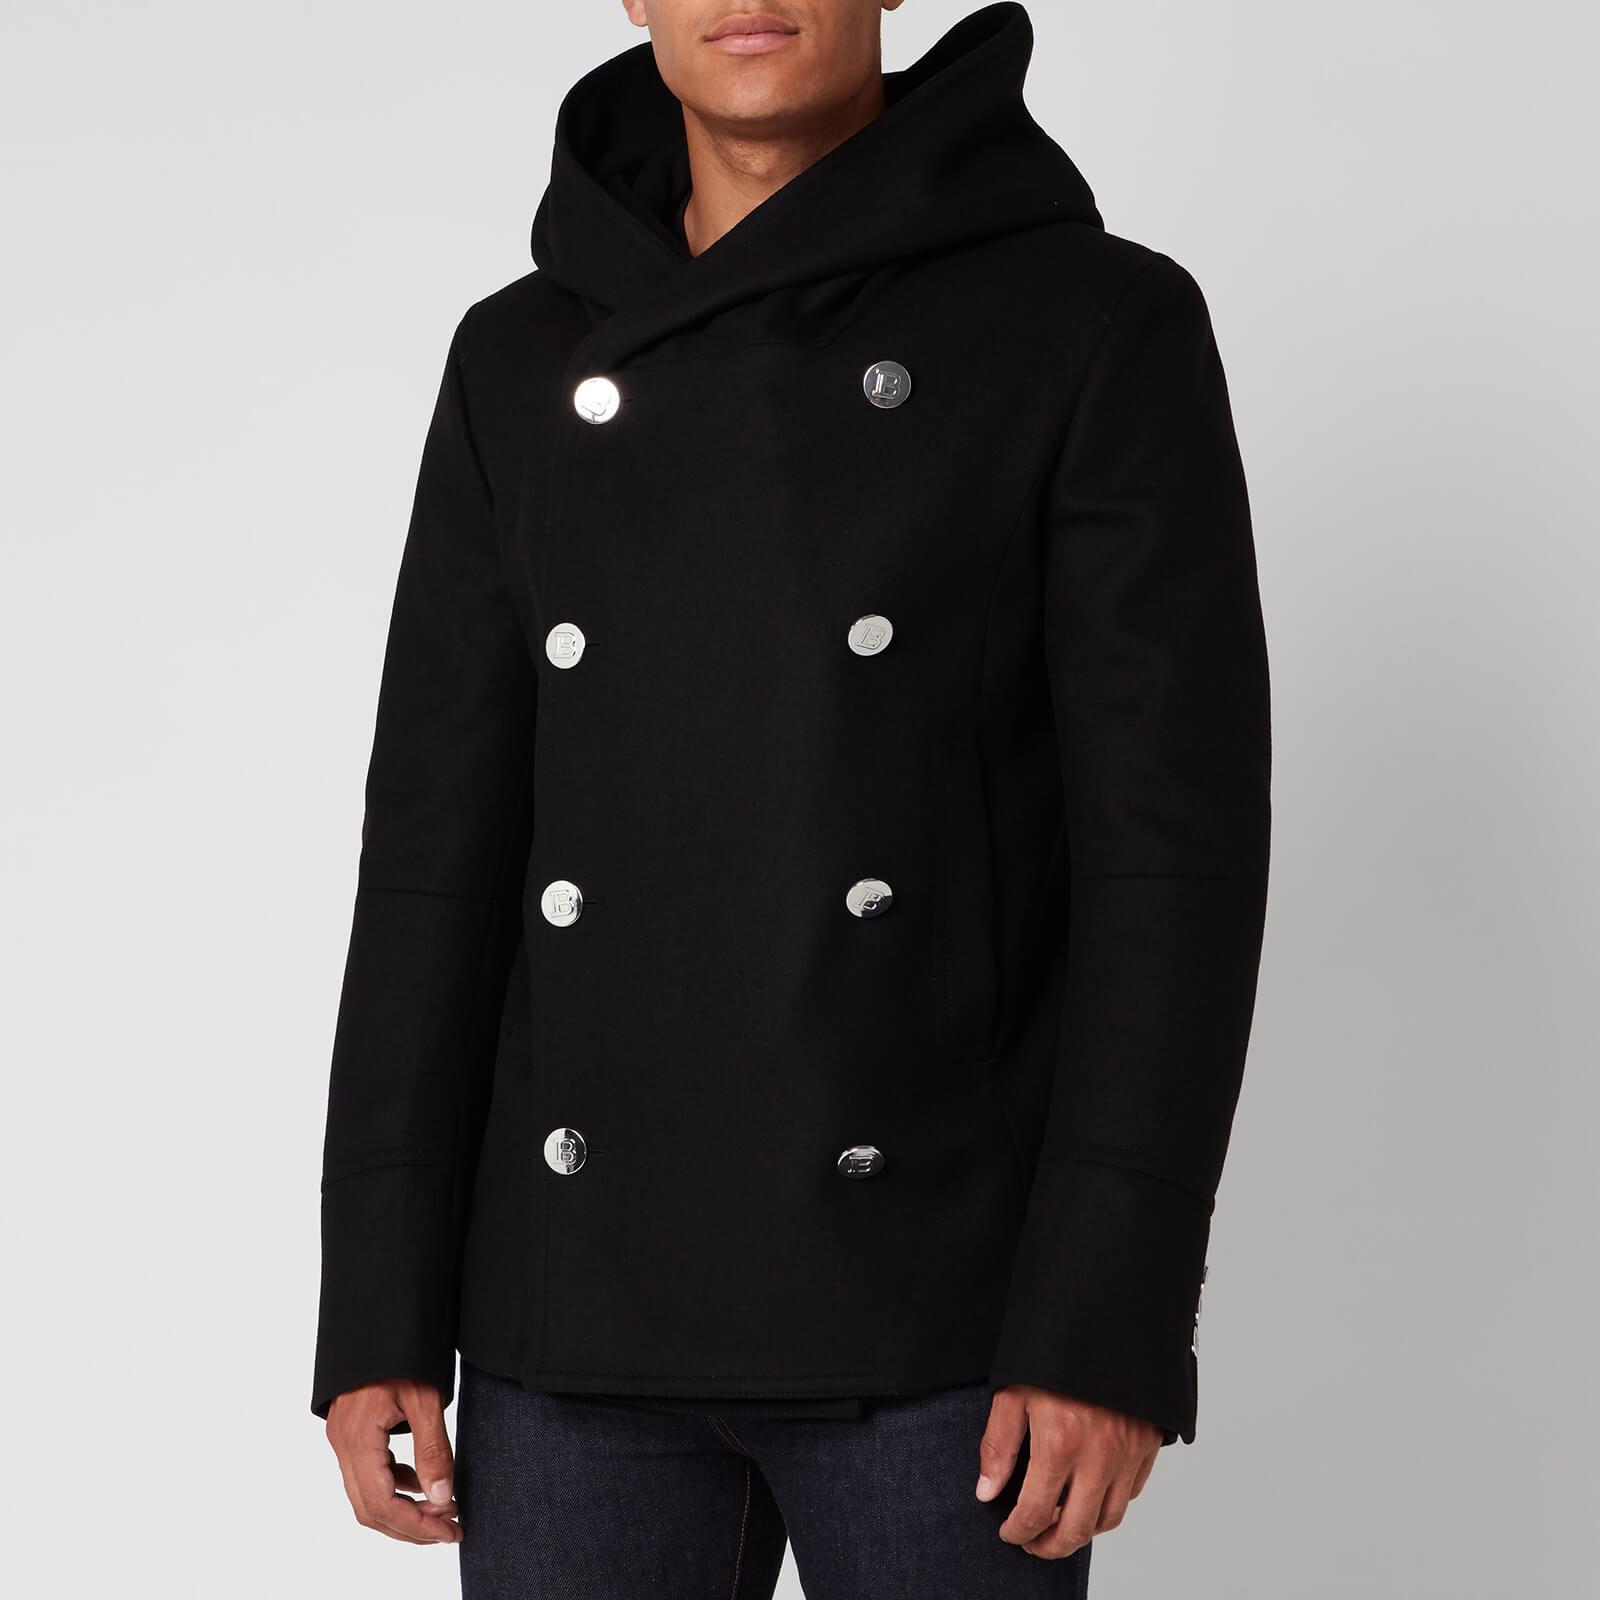 Balmain Hooded Wool Pea Coat in Black for Men - Lyst